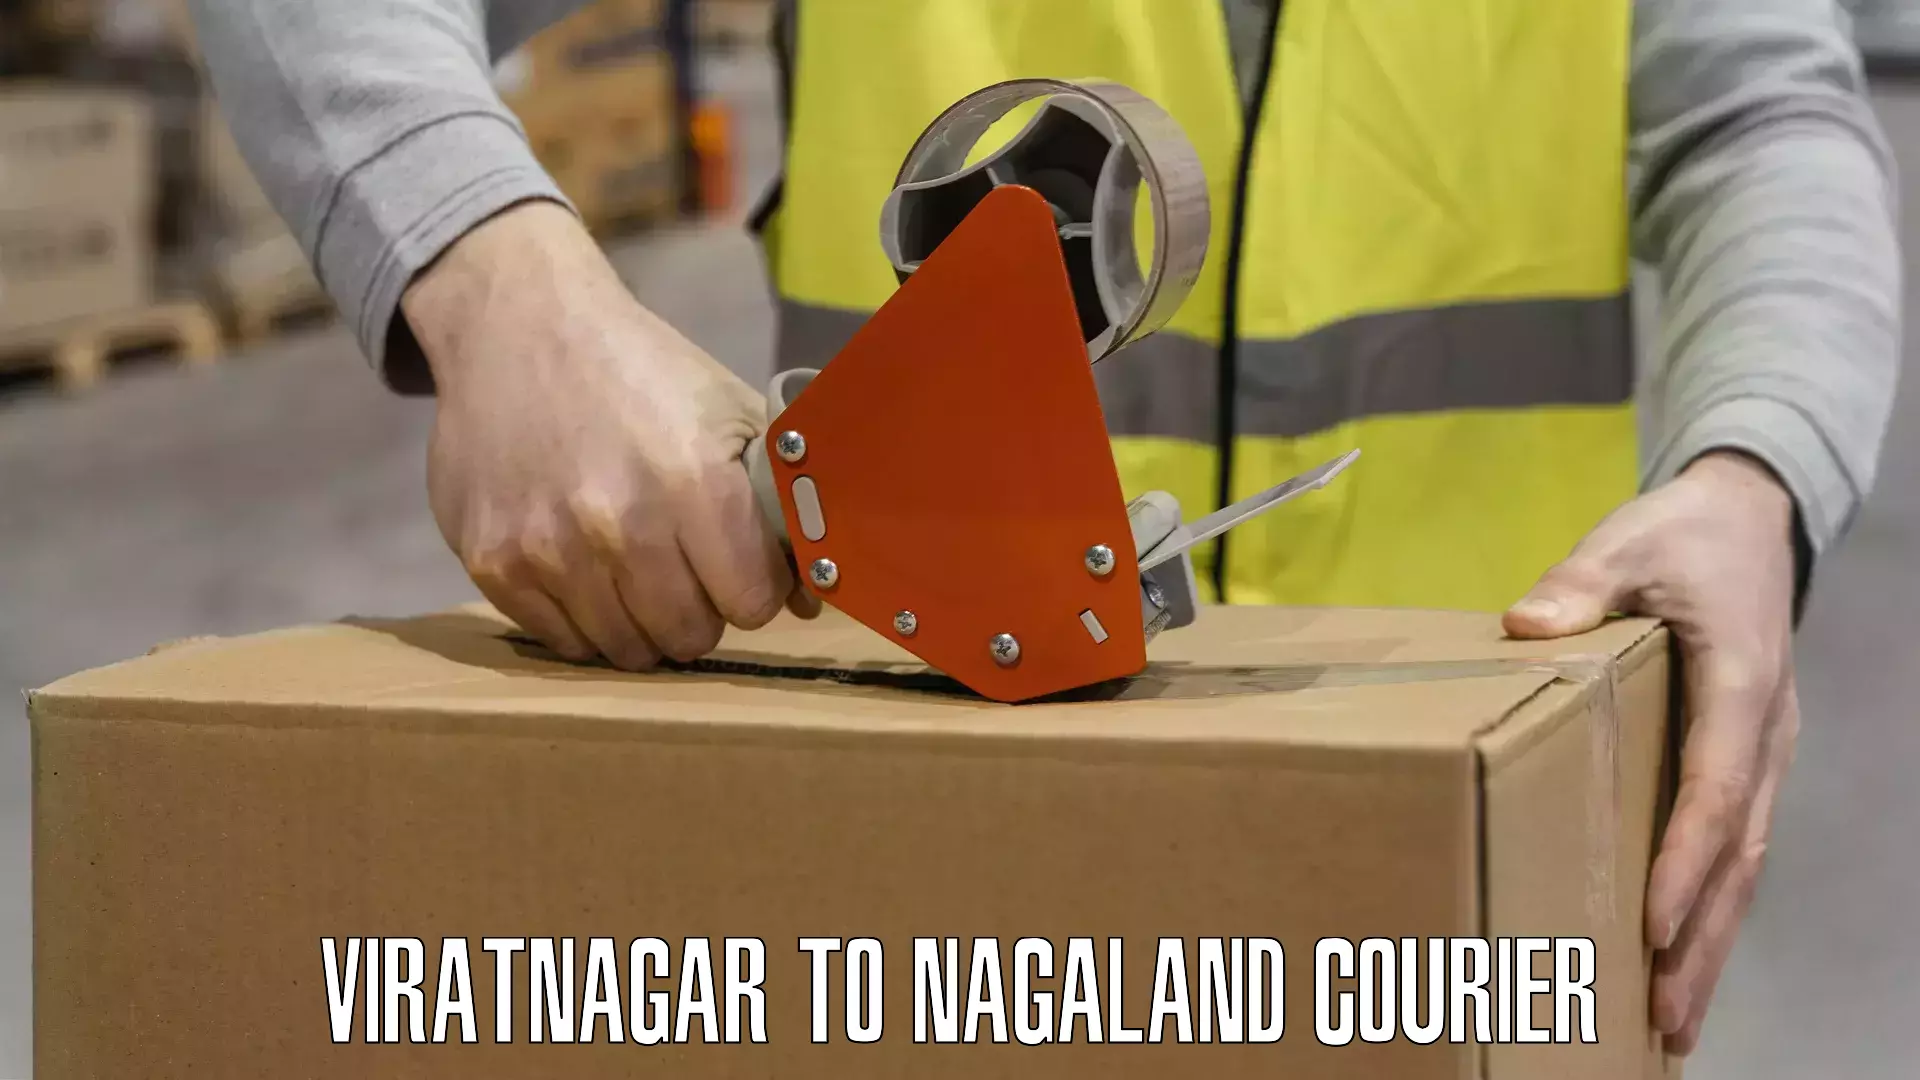 Courier service innovation Viratnagar to Nagaland